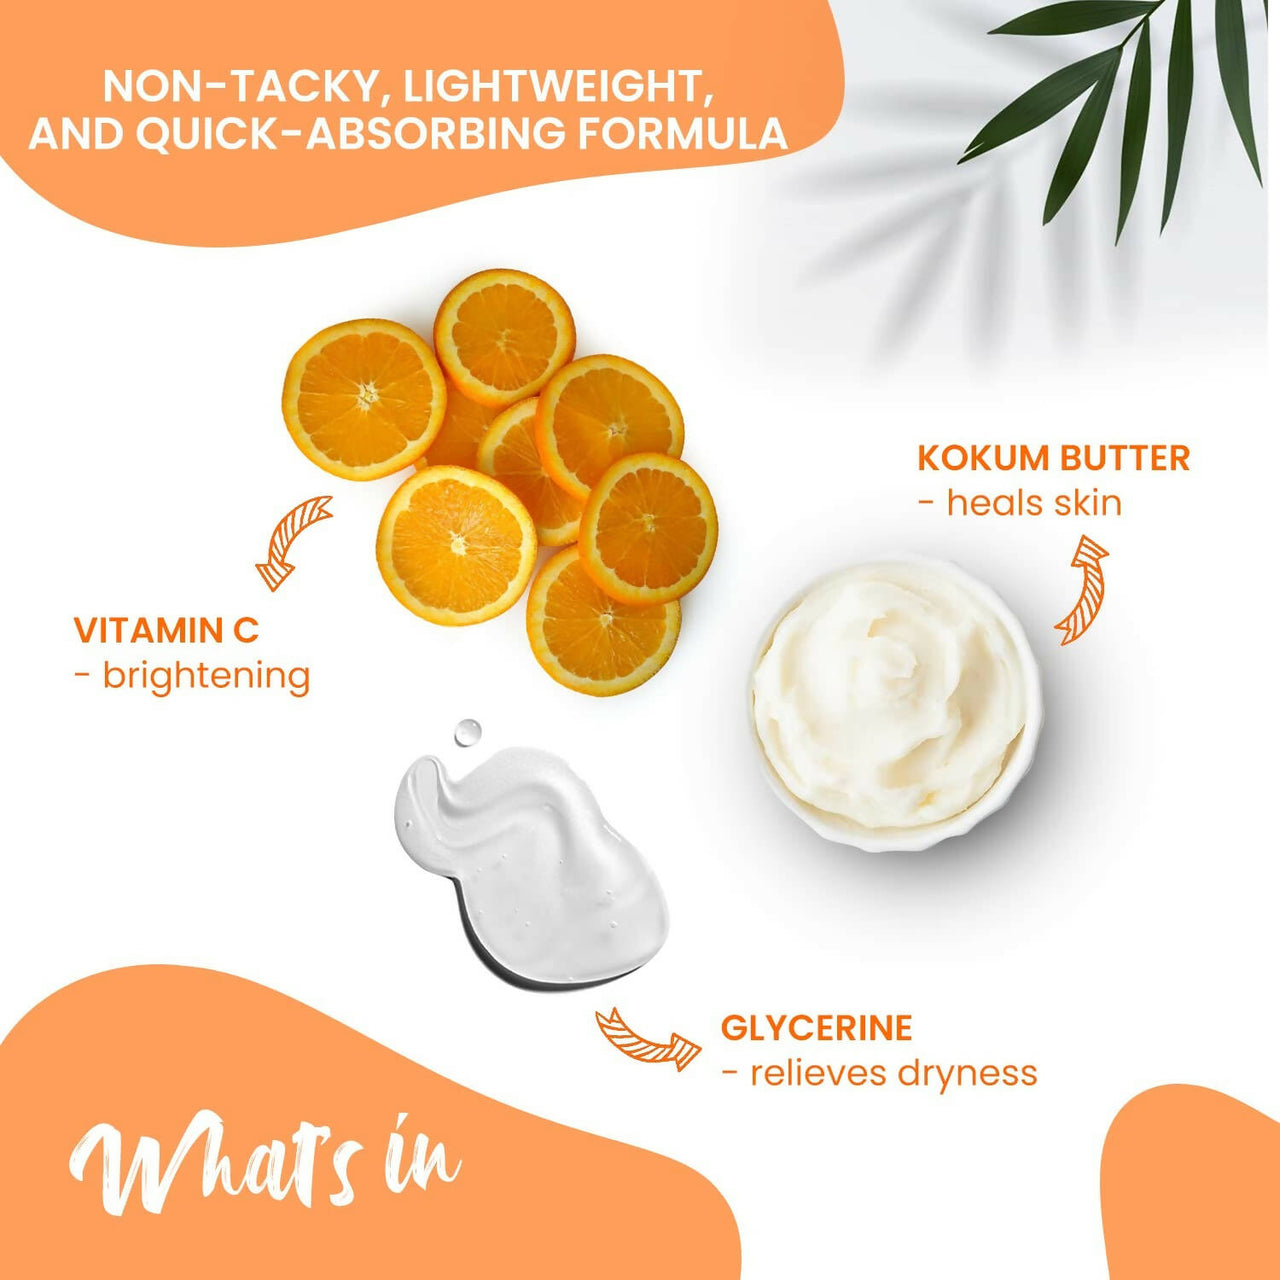 NutriGlow NATURAL'S Vitamin C Lightening Body Yogurt, Moisturize Skin, Deep Nourishing - Distacart